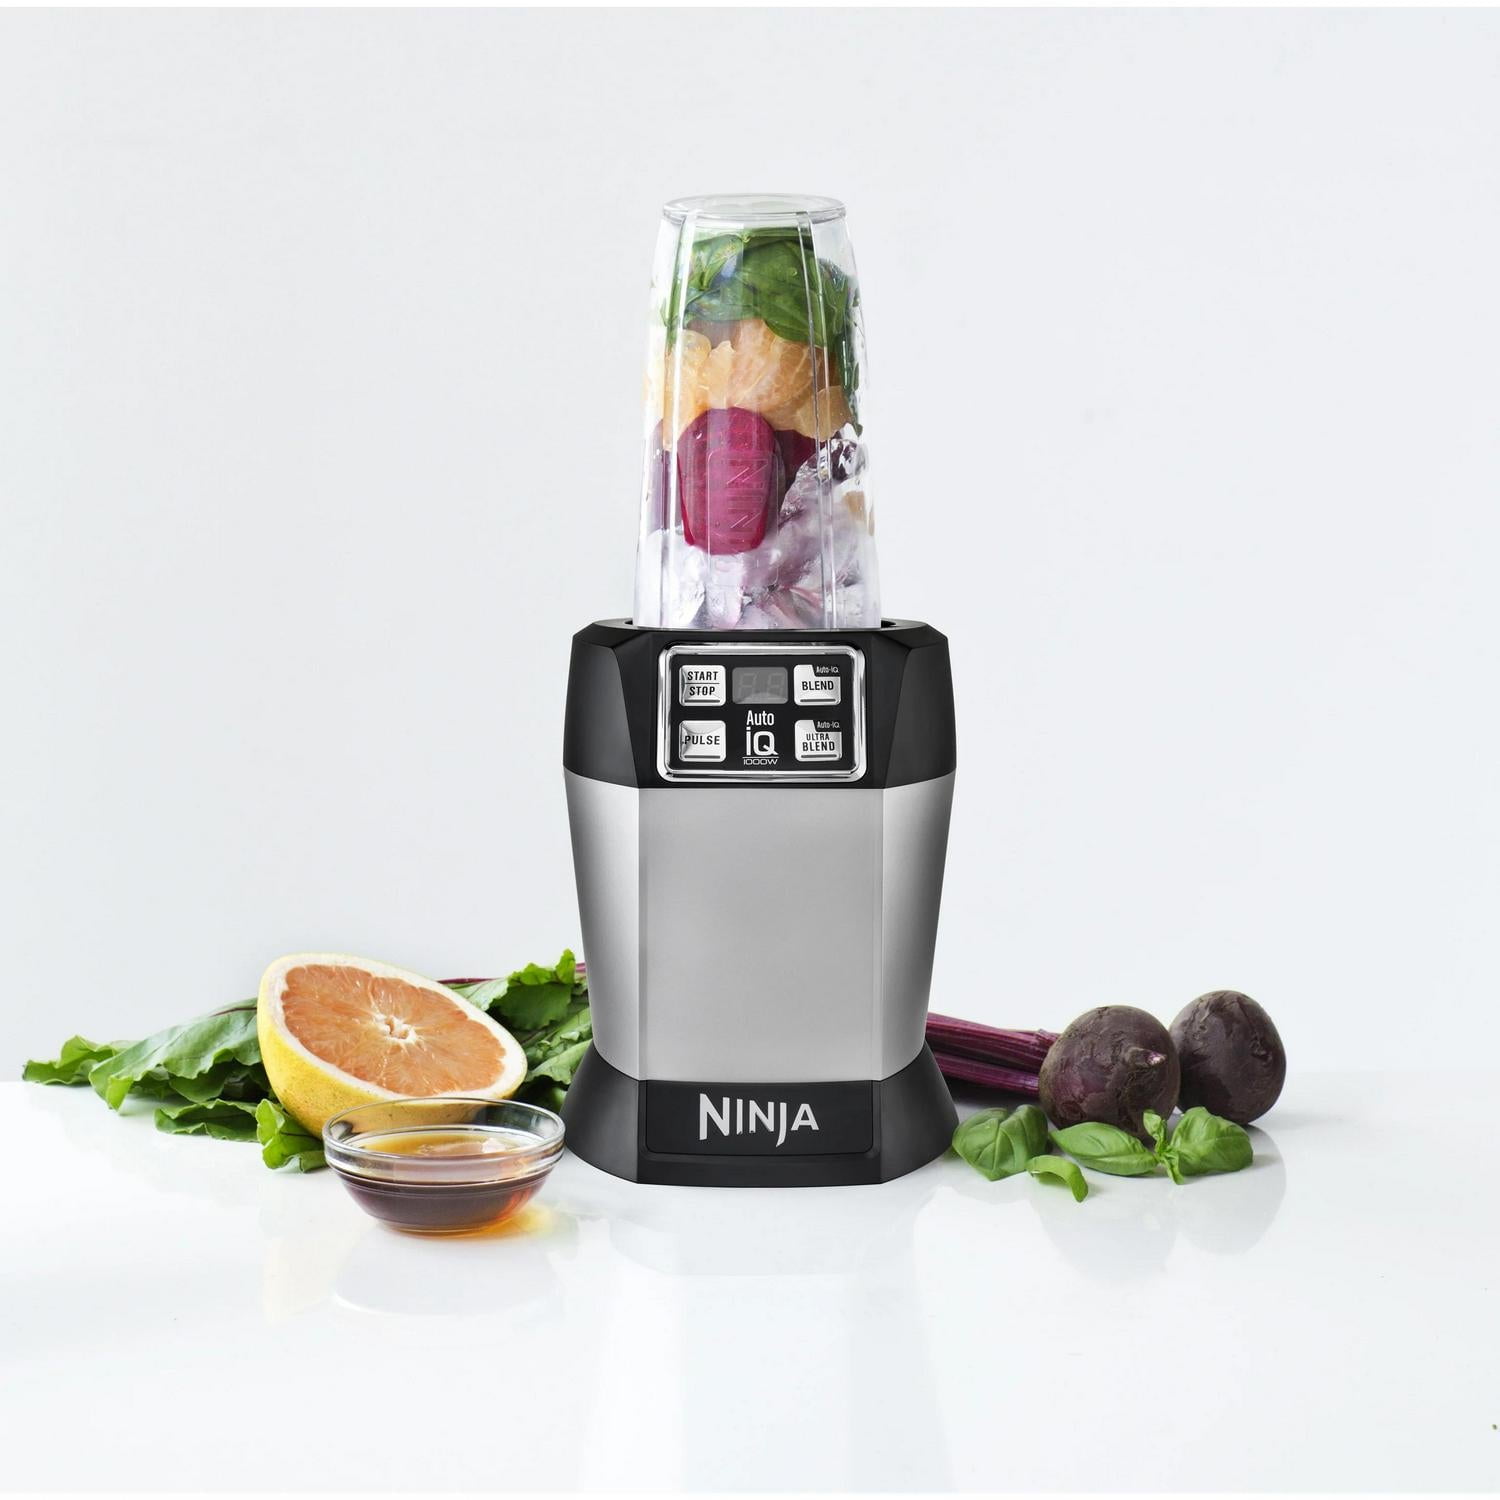 Nutri Auto-iQ One Touch Blender by Ninja at Fleet Farm